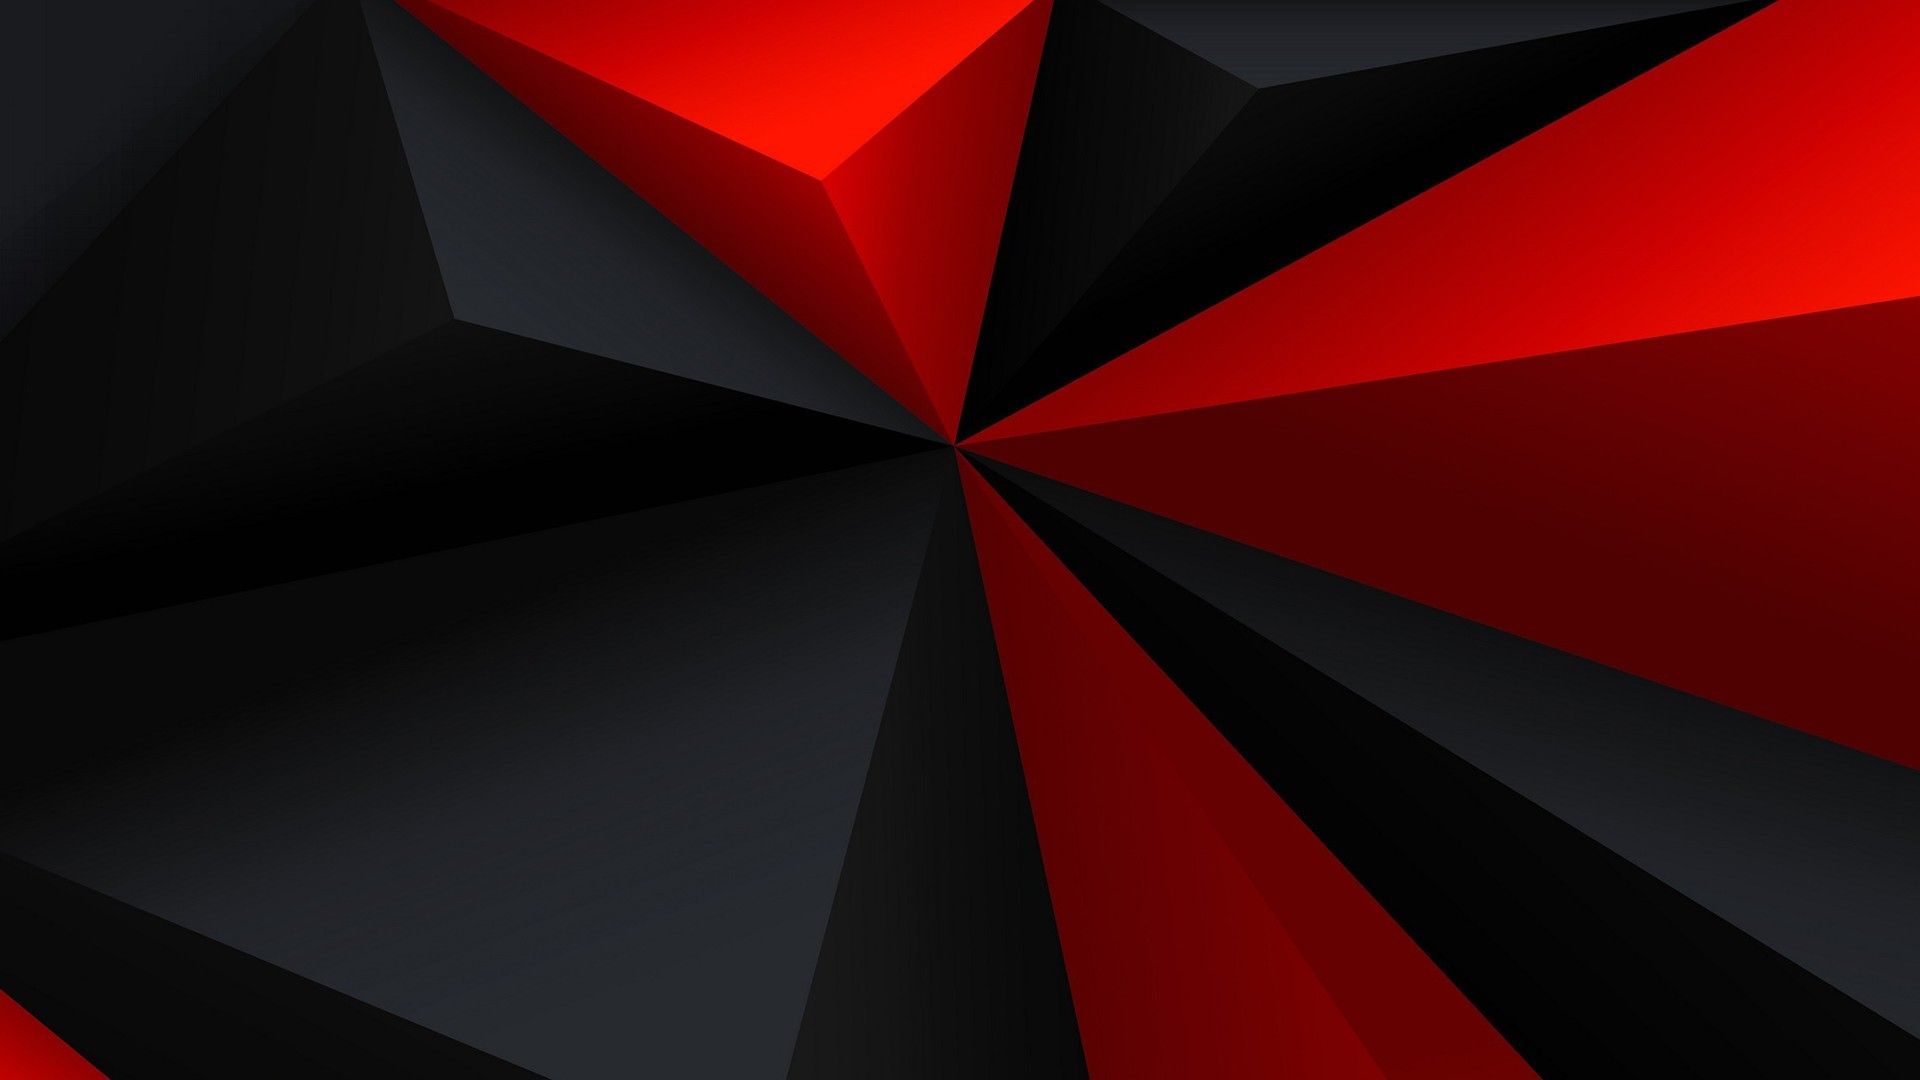 Abstract Computer Wallpaper, Desktop Background Black Geometric Background